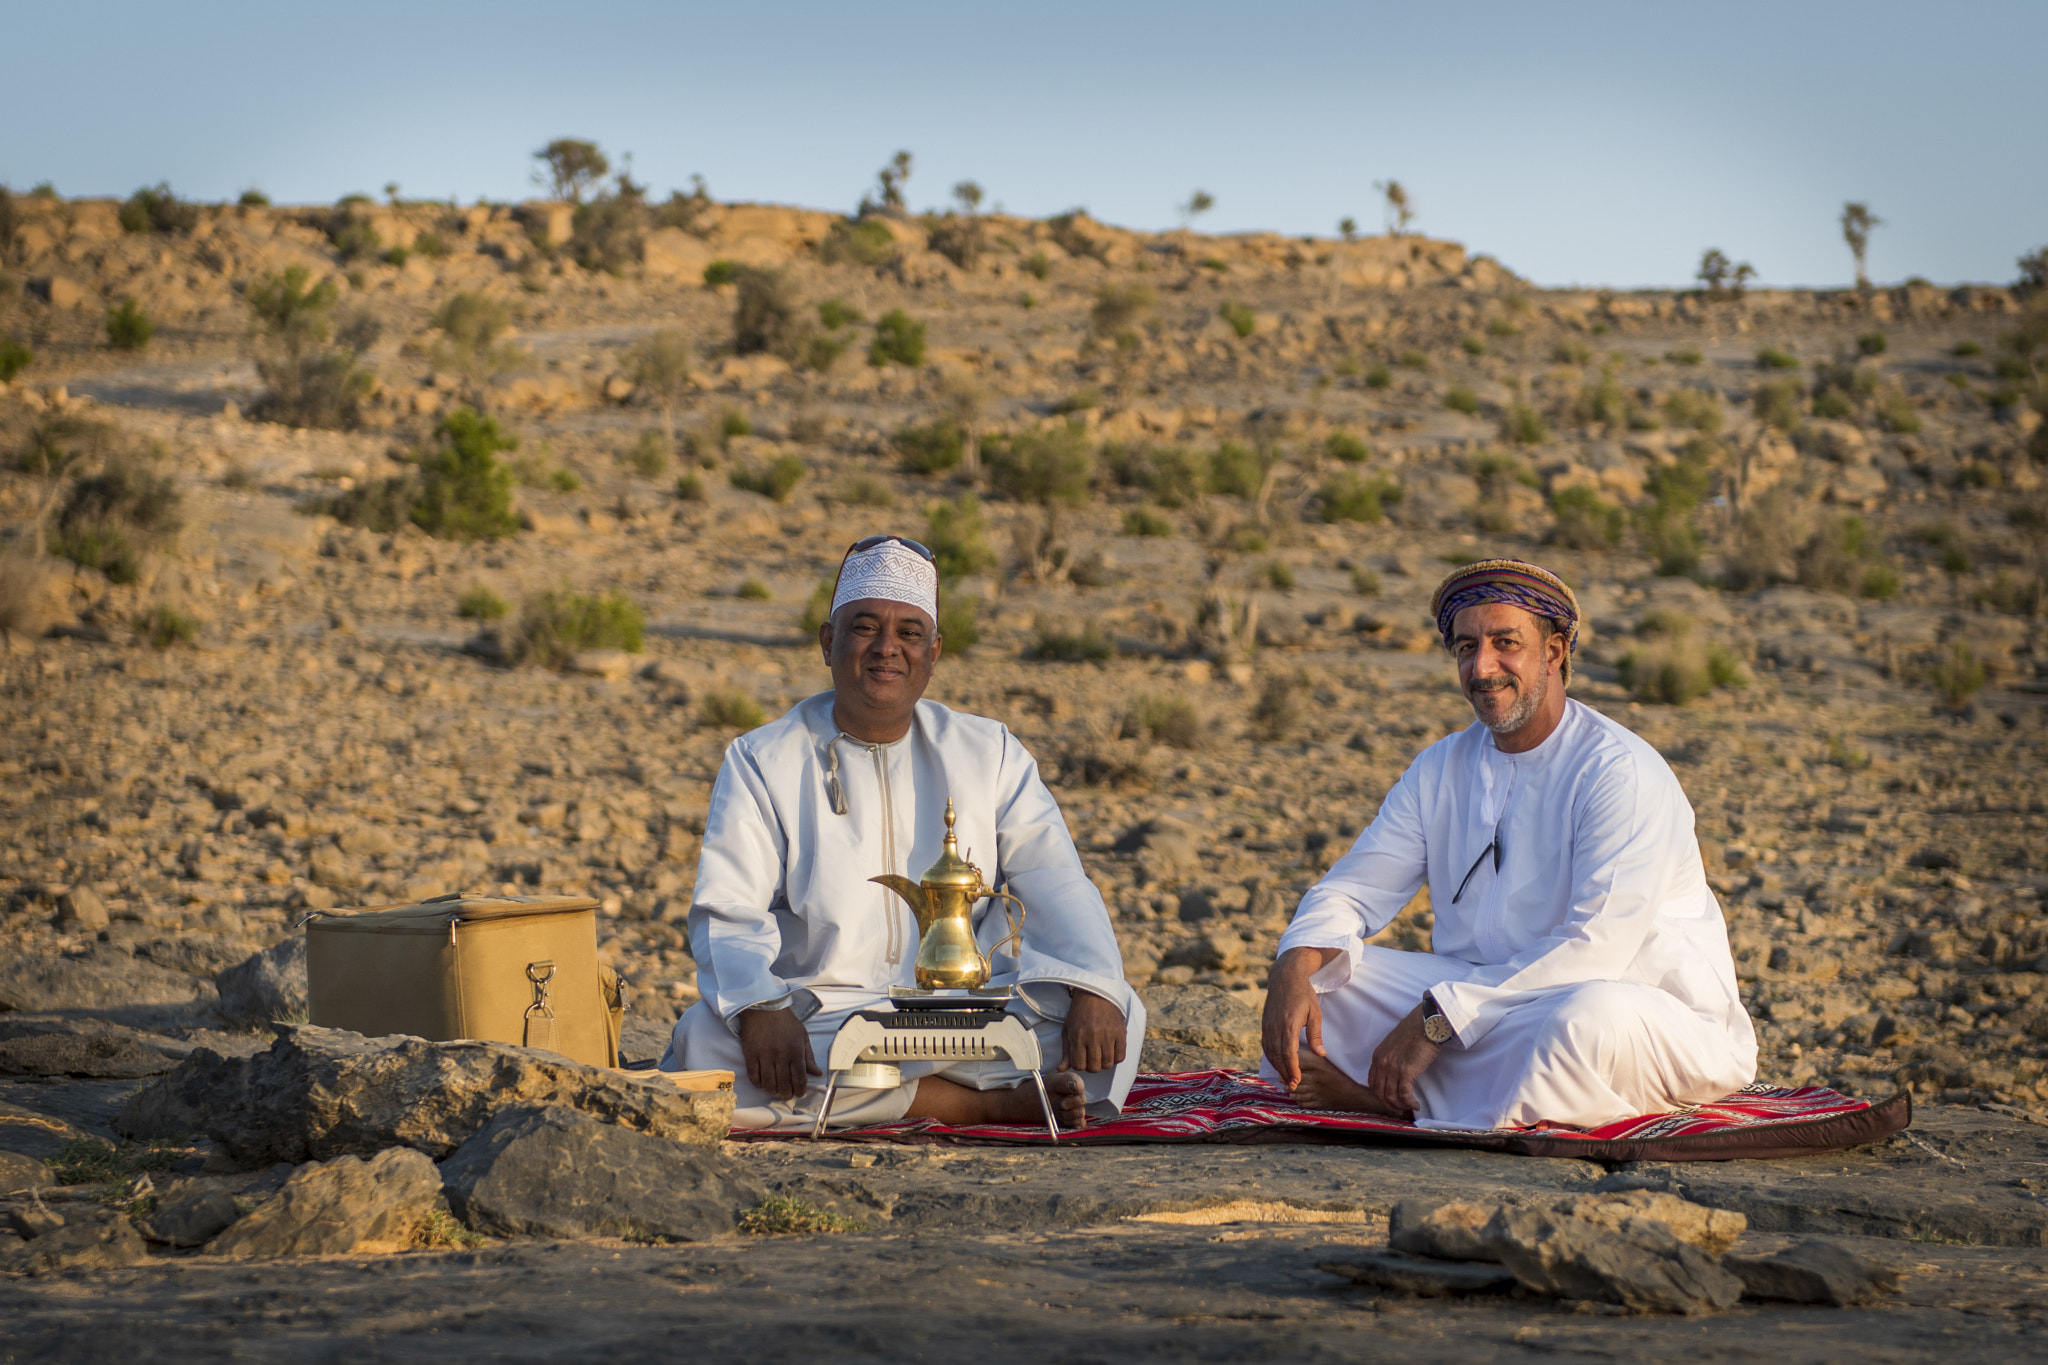 Omani hospitality